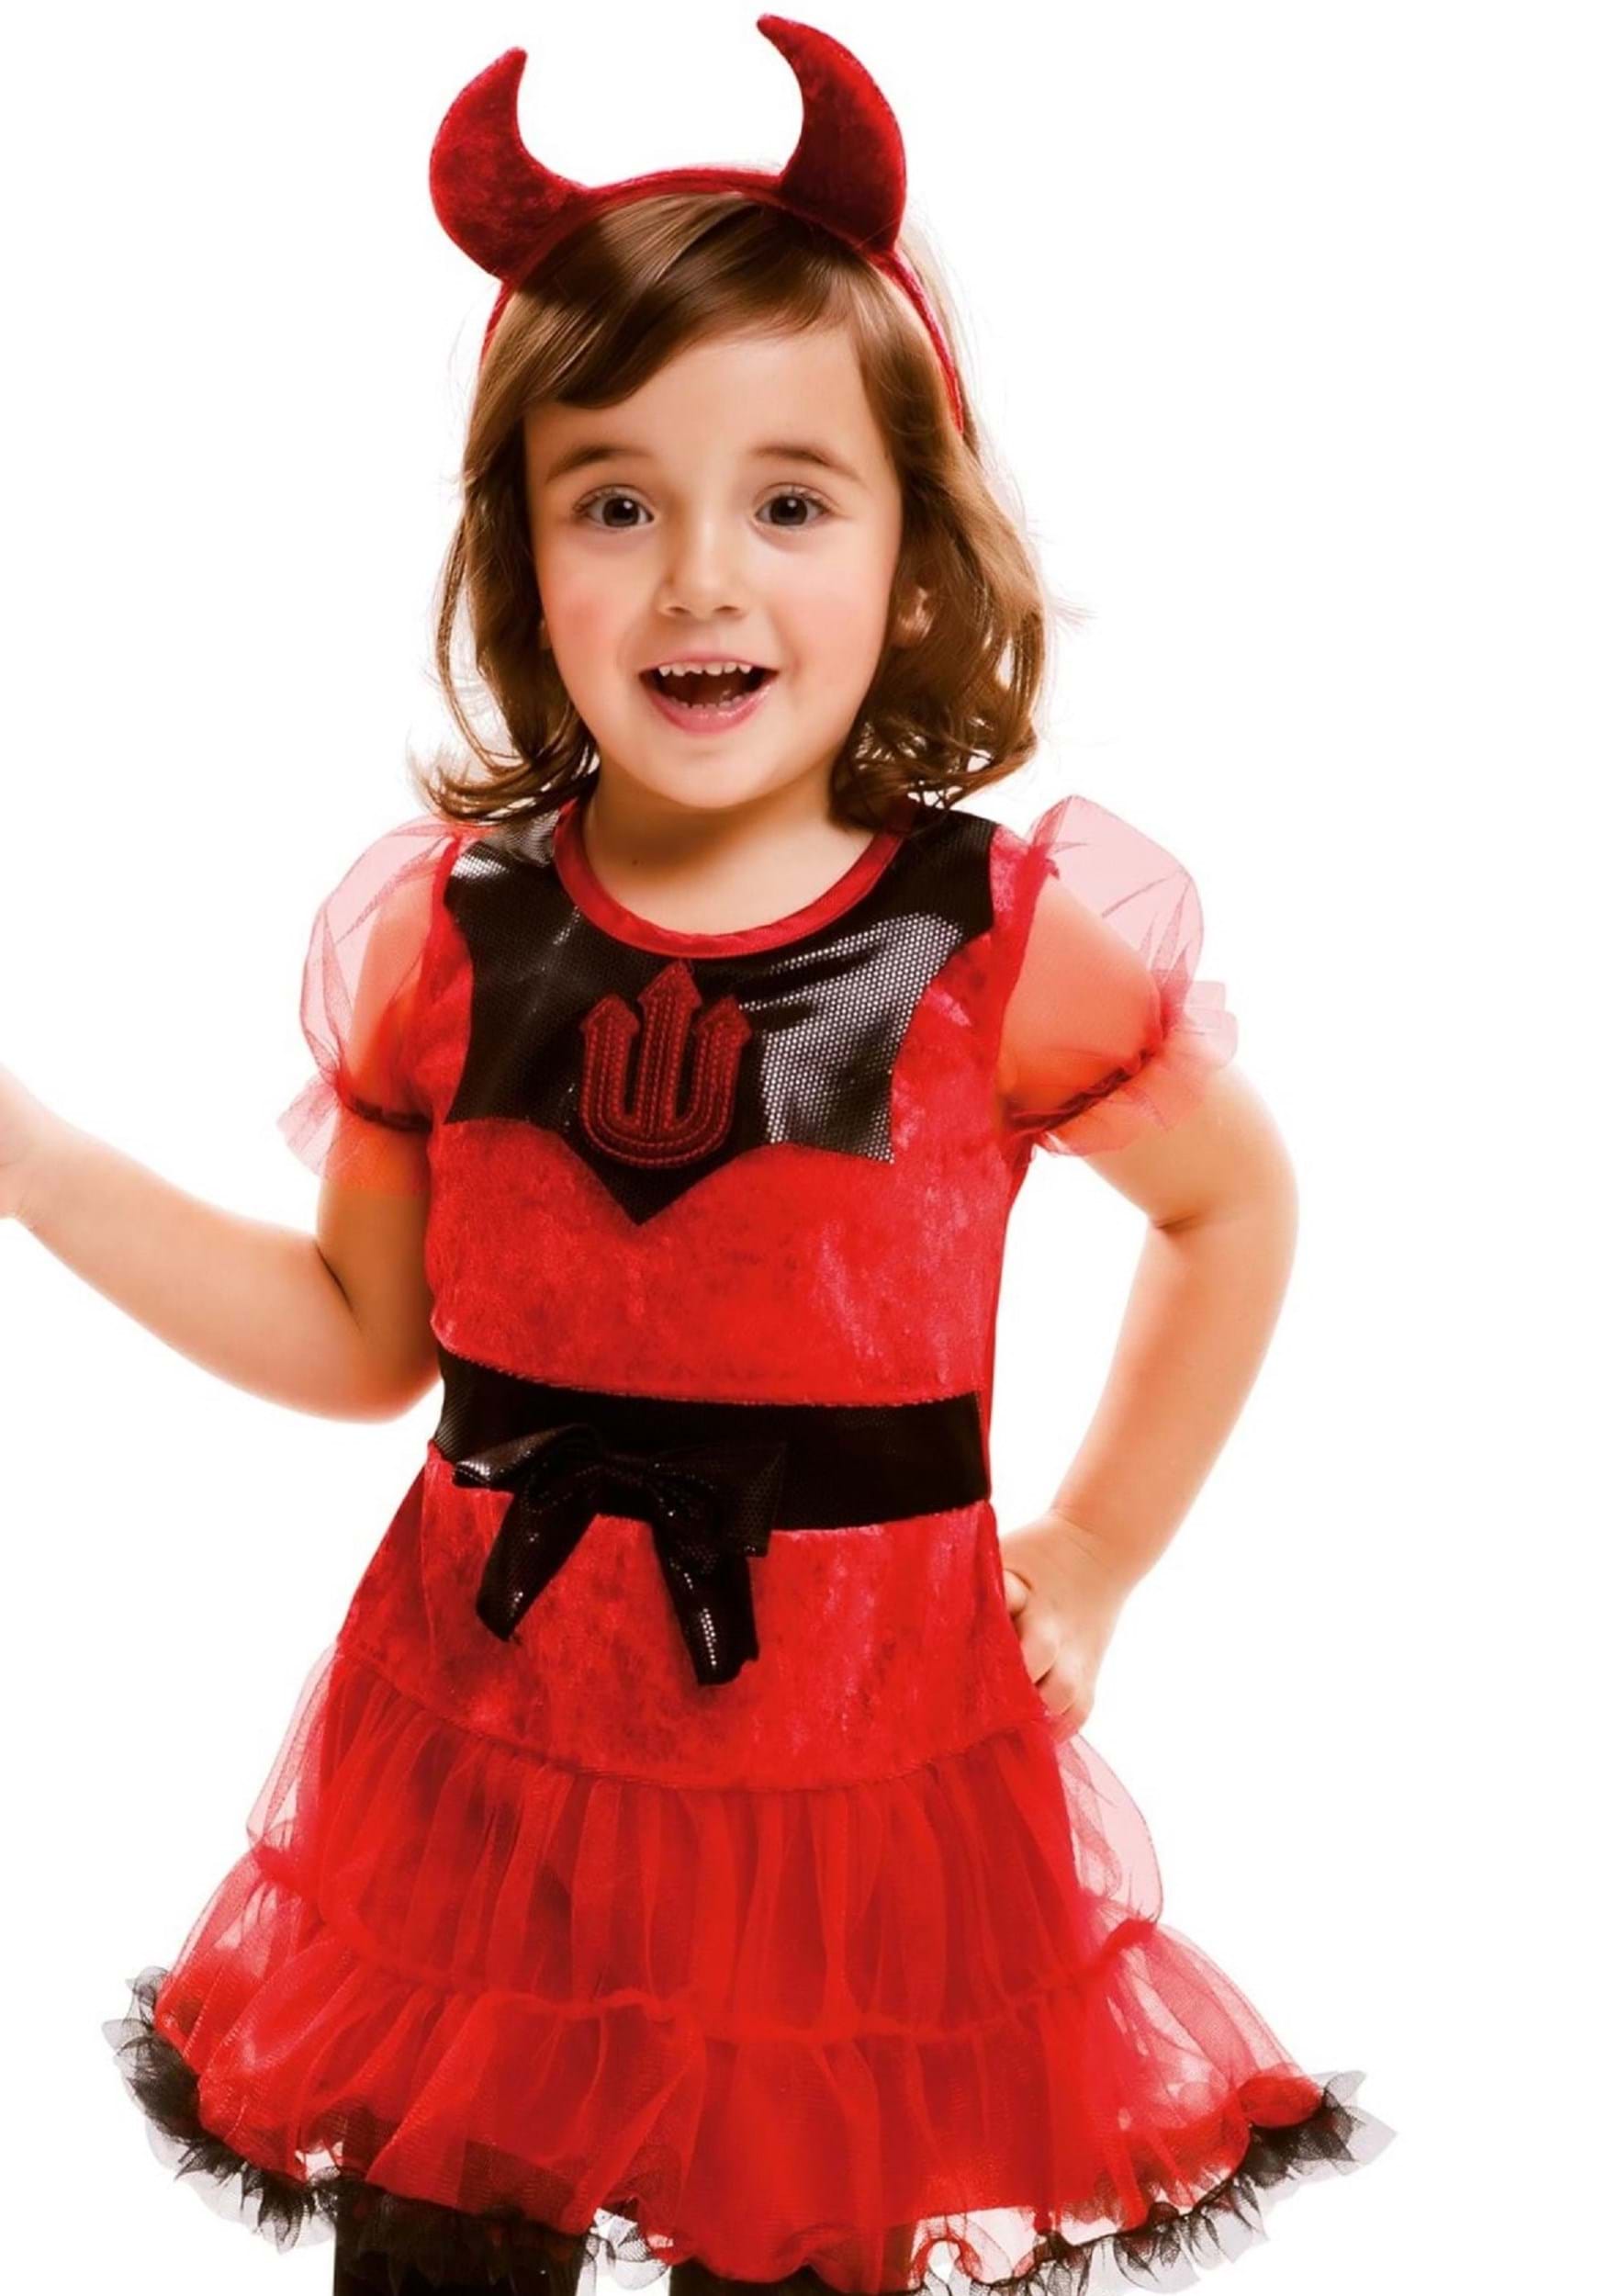 Cute She-Devil Toddler Costume